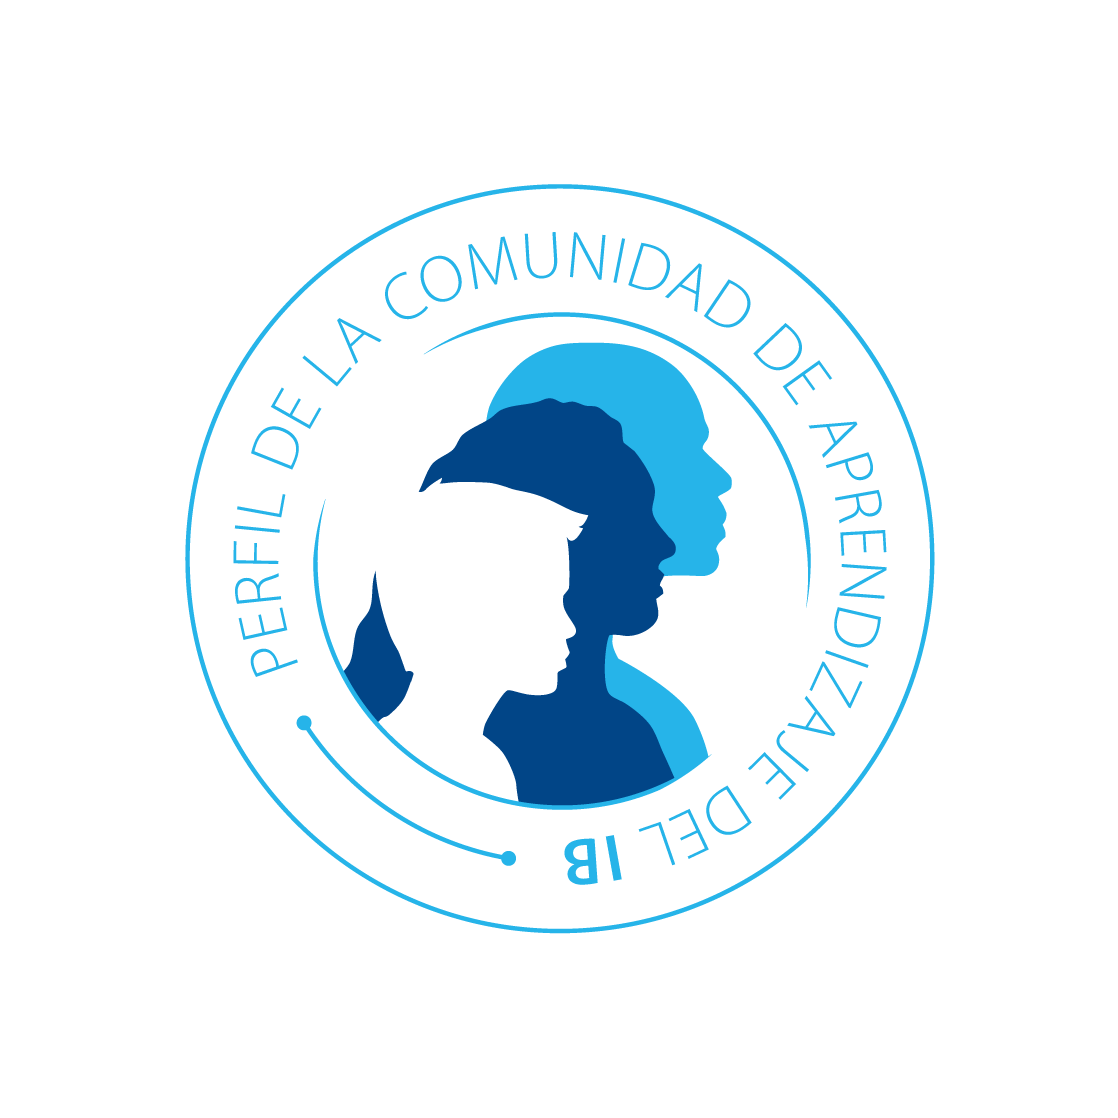 Logotipos del Perfil de la comunidad de aprendizaje